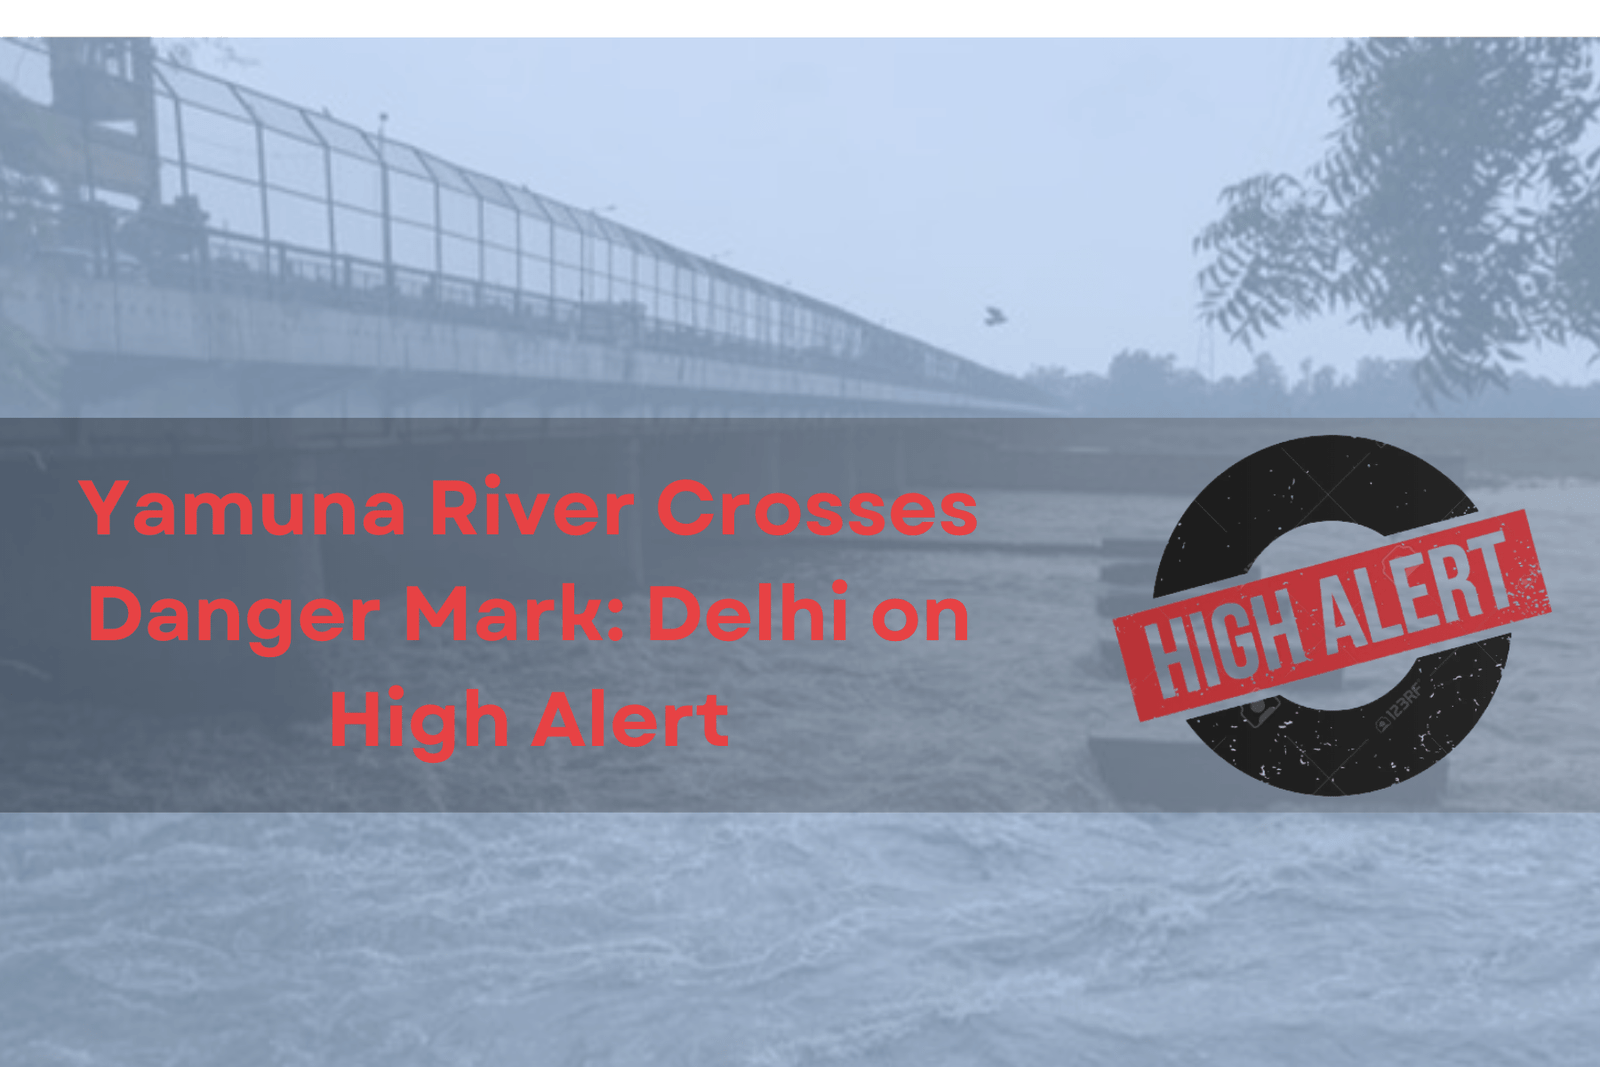 Delhi on High Alert: Yamuna River Crosses Dangerous Mark